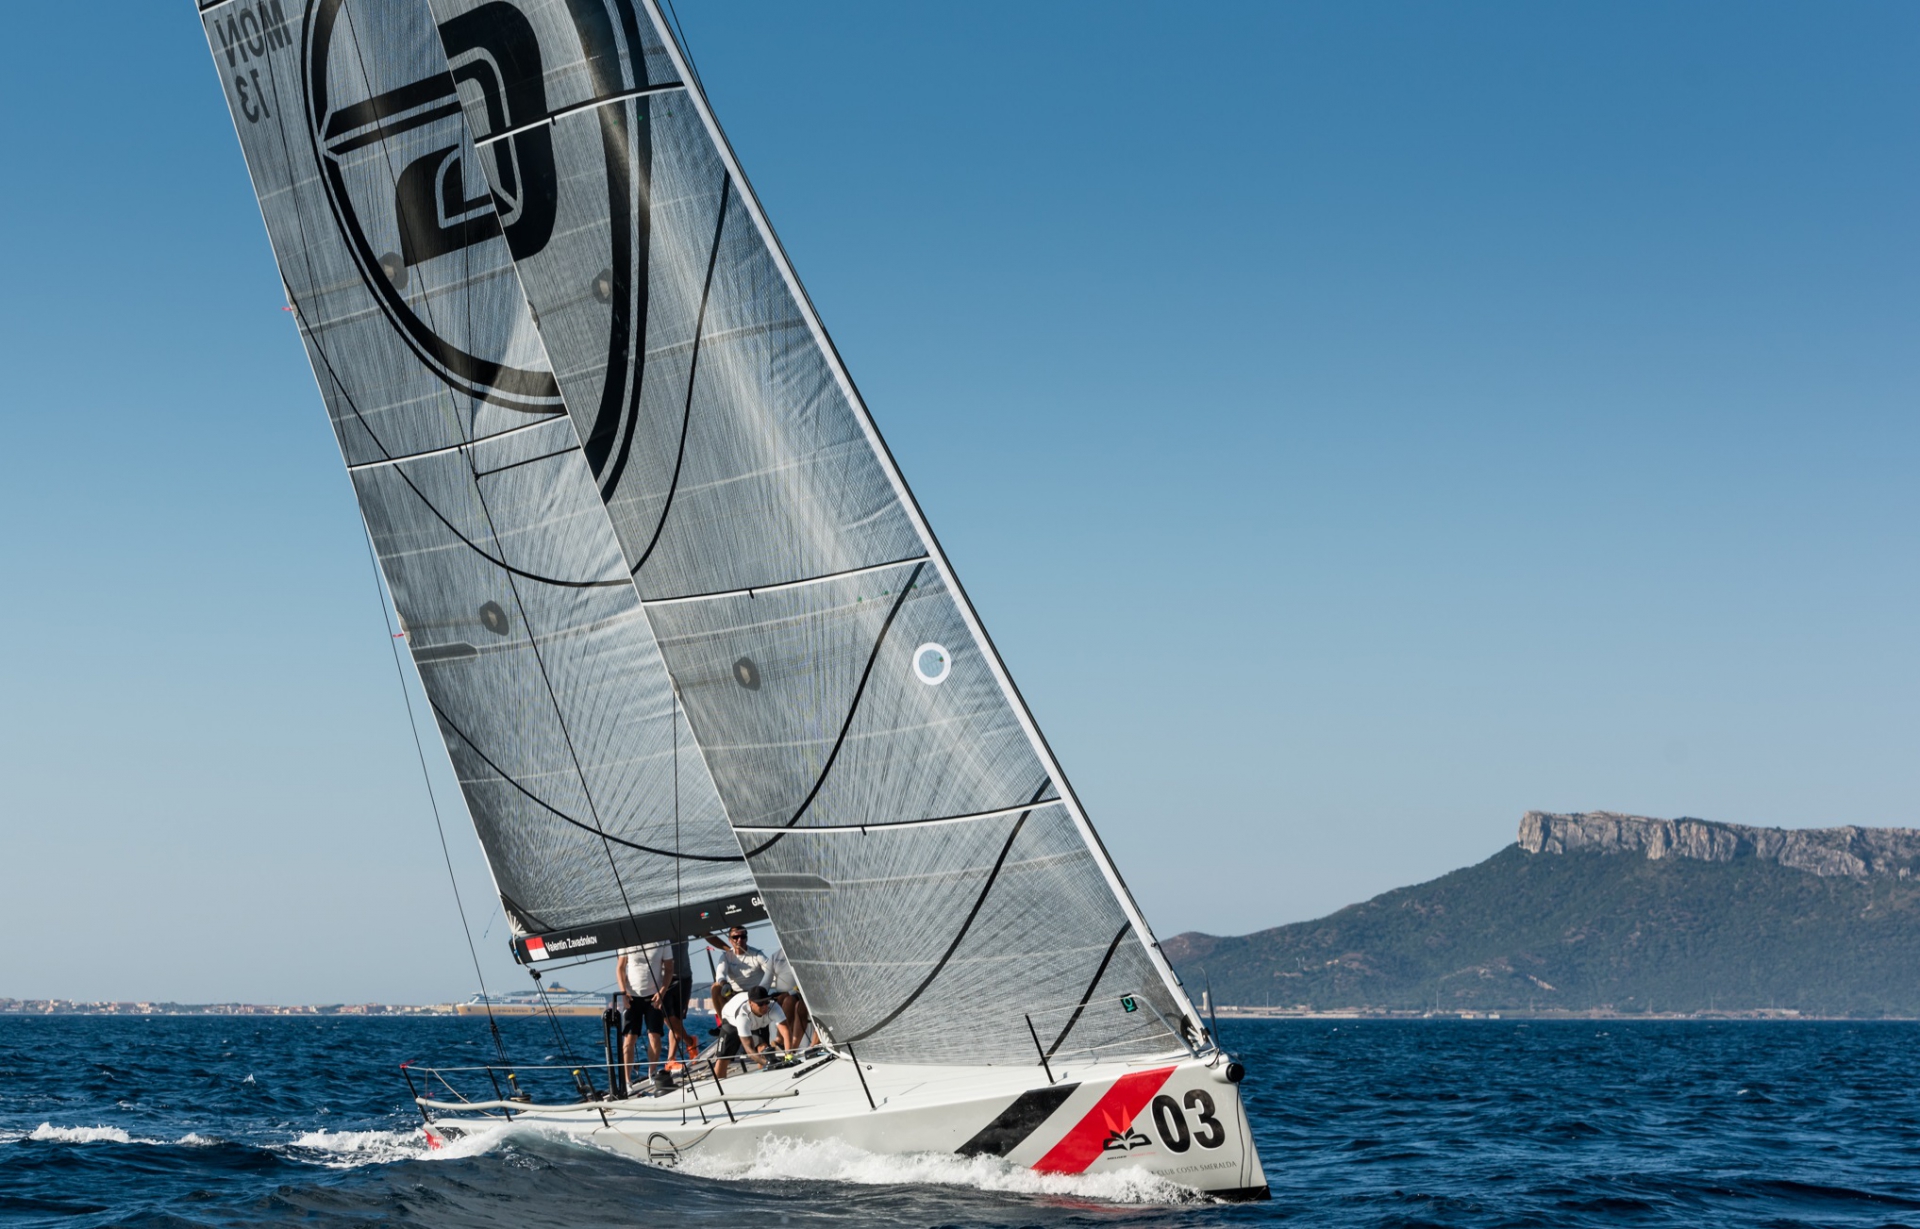  Melges 40 Grand Prix all'esordio in regata tra le boe dello Yacht Club Costa Smeralda - News - Yacht Club Costa Smeralda